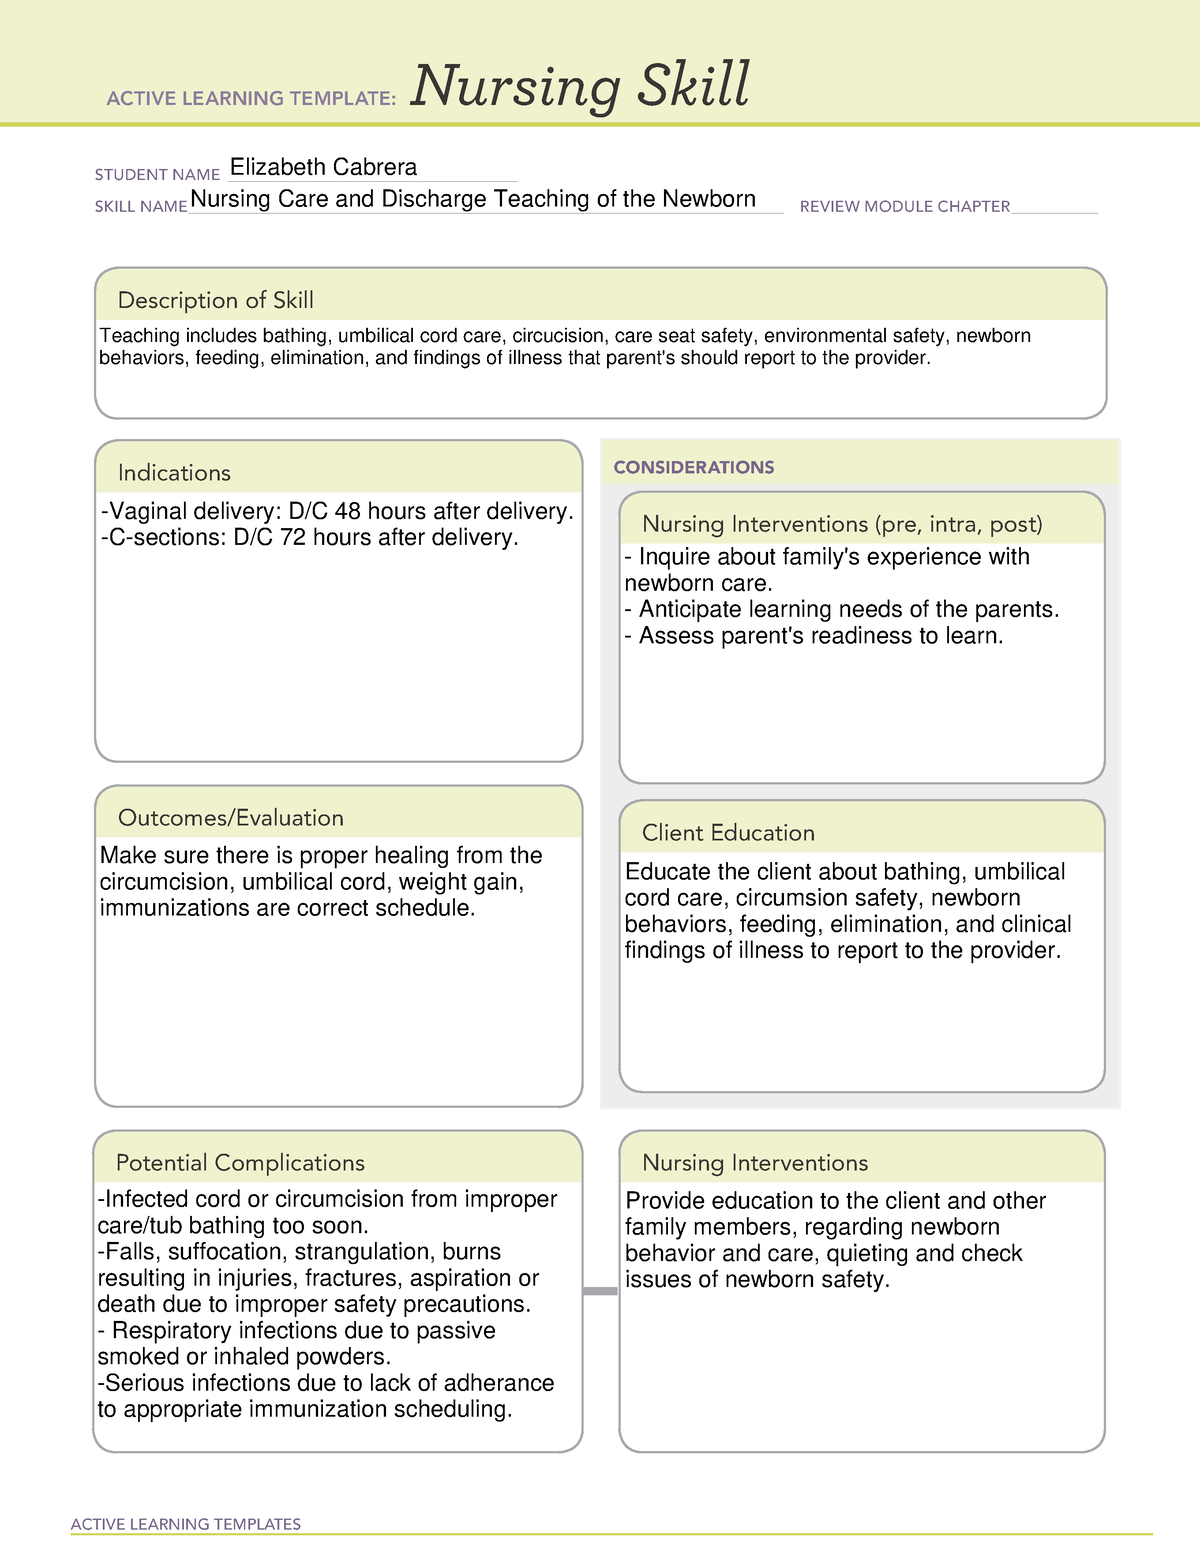 Discharge ATI Maternal Newborn Skill Sheet. ACTIVE LEARNING